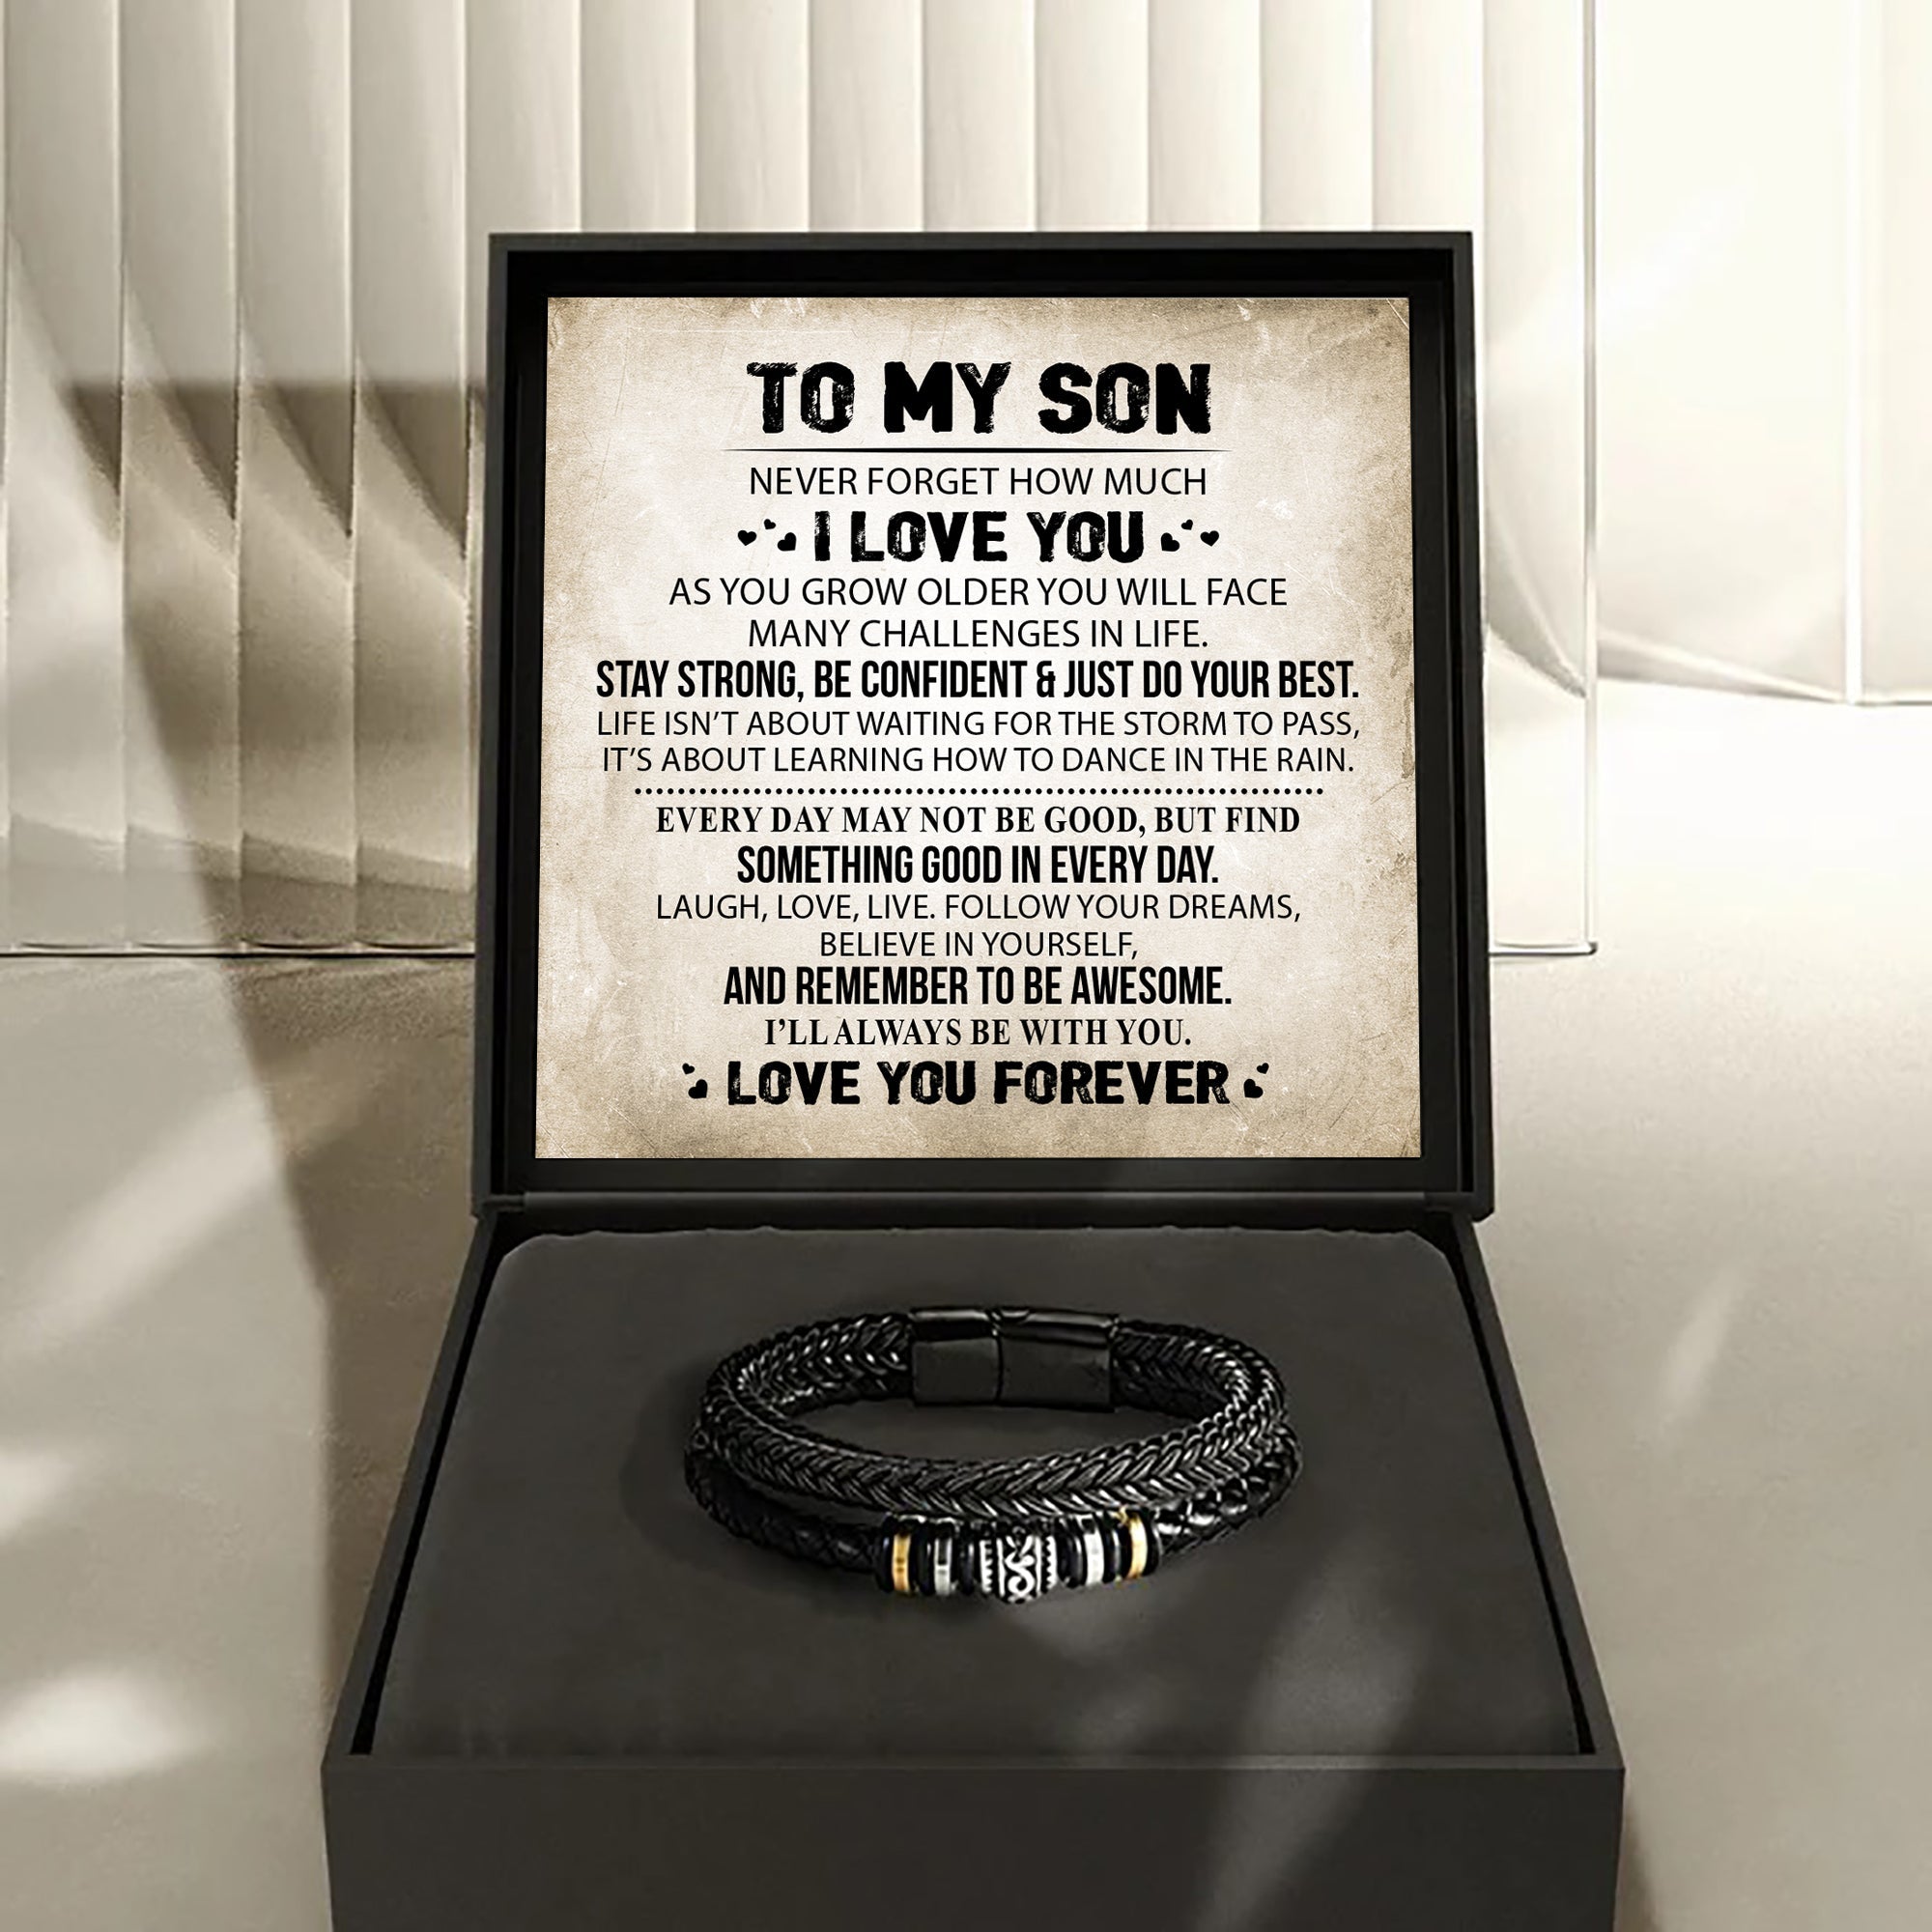 To My Son - "I Love You Forever" Bracelet Set